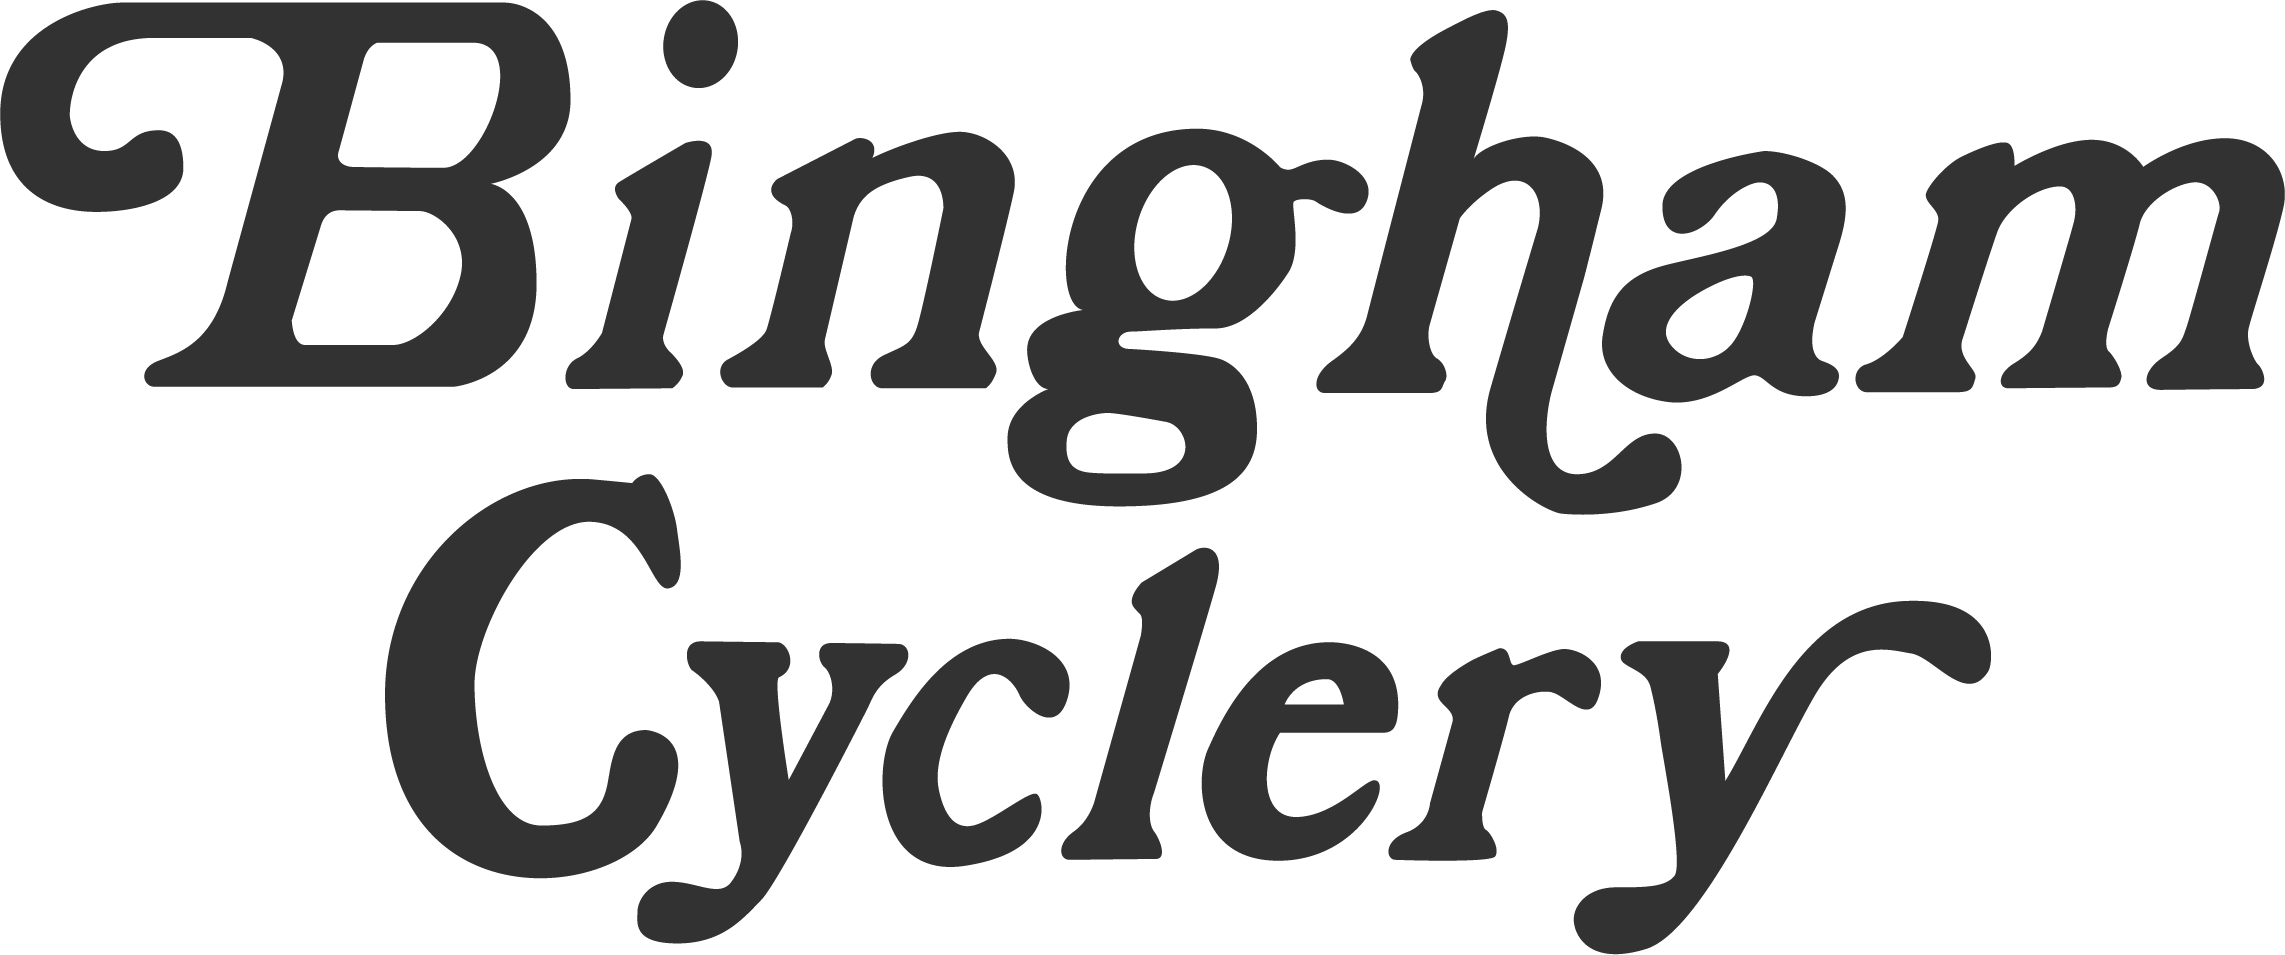 Bingham Cyclery logo